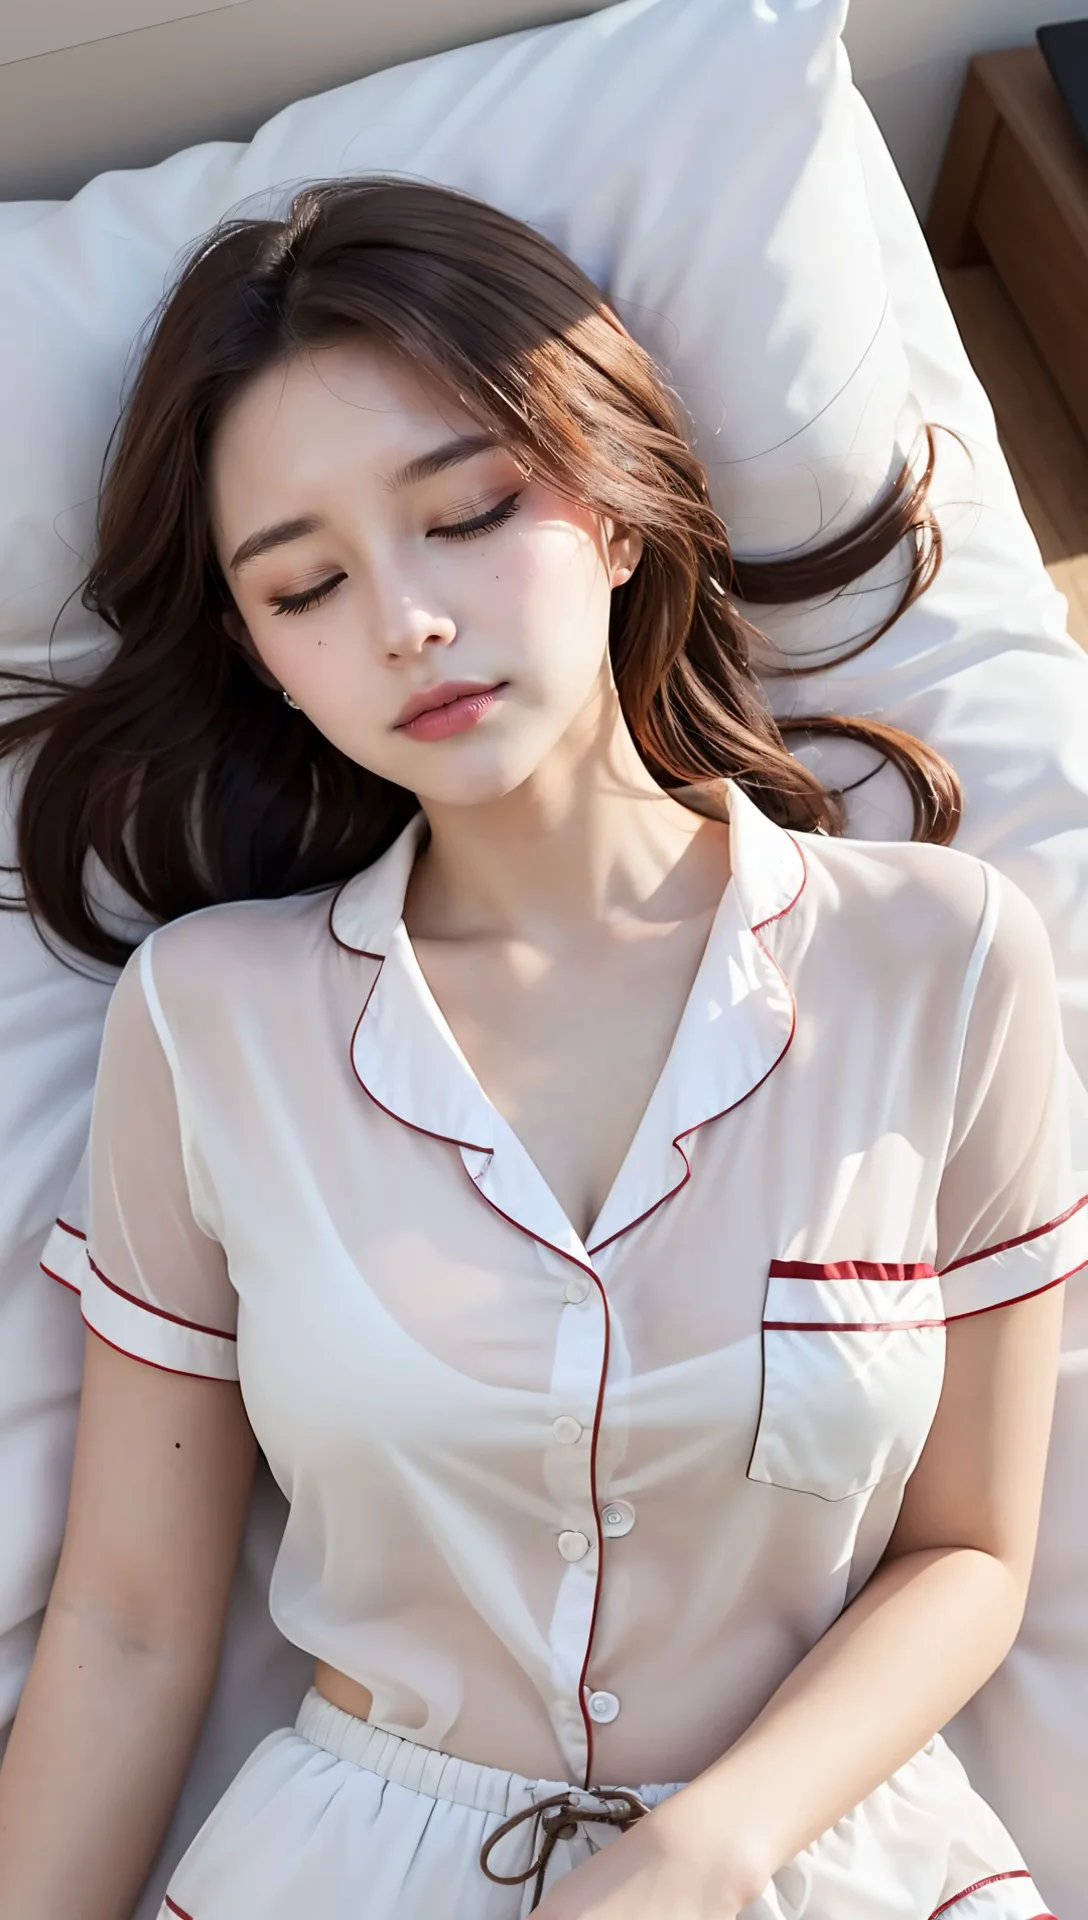 Ai Lookbook Sexy Girl Sleeping Images 19